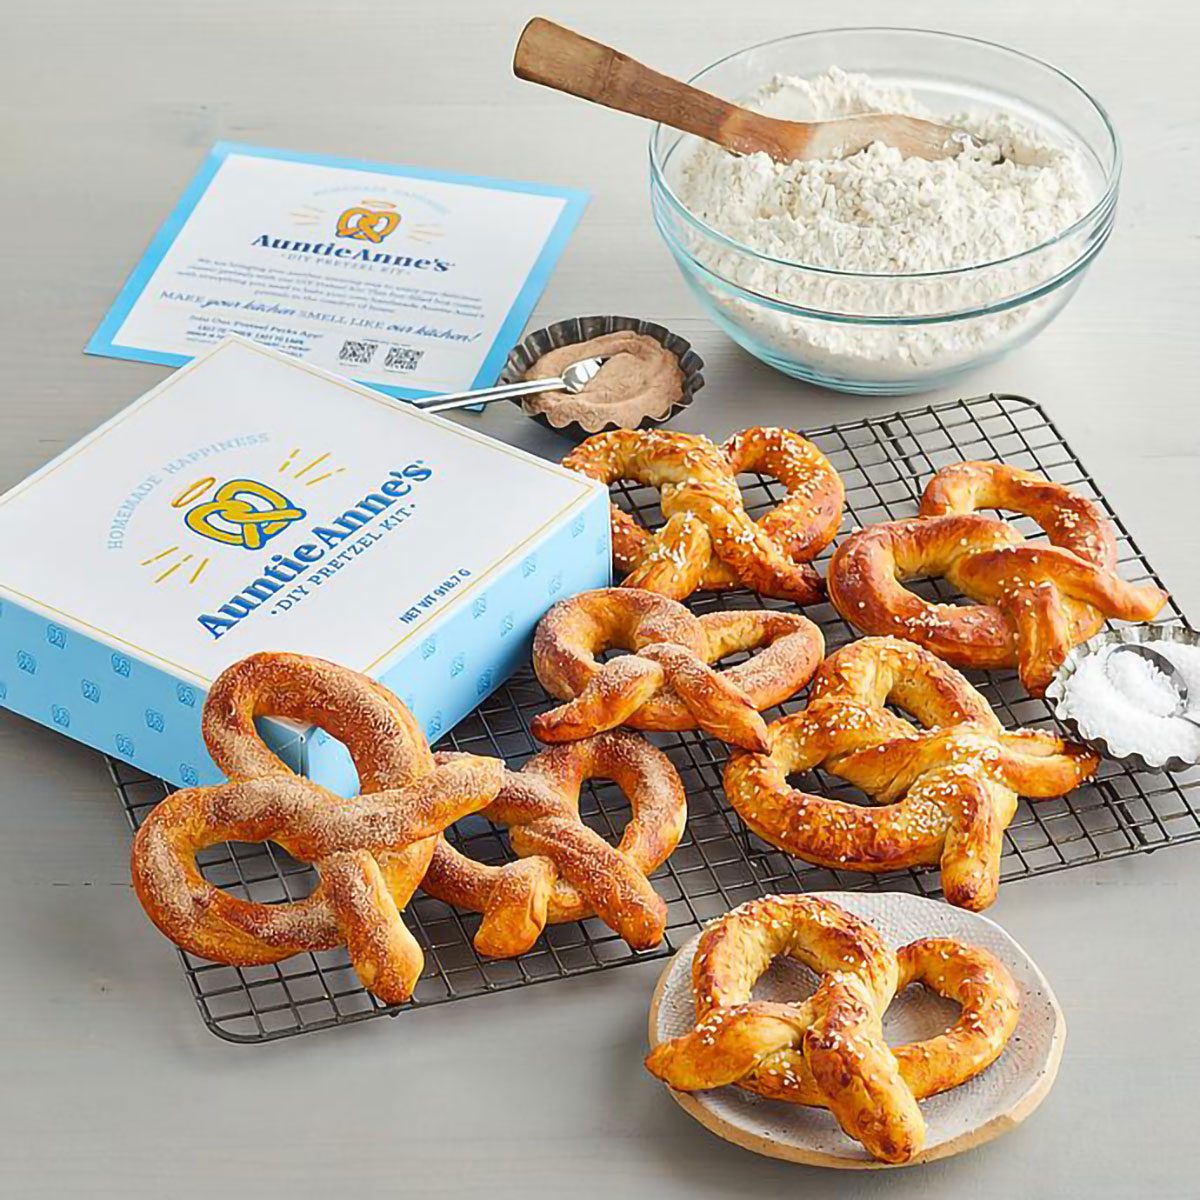 https://www.tasteofhome.com/wp-content/uploads/2023/02/auntie-annes-pretzel-making-kit-via-harryanddavid.com-ecomm.jpg?fit=700%2C700